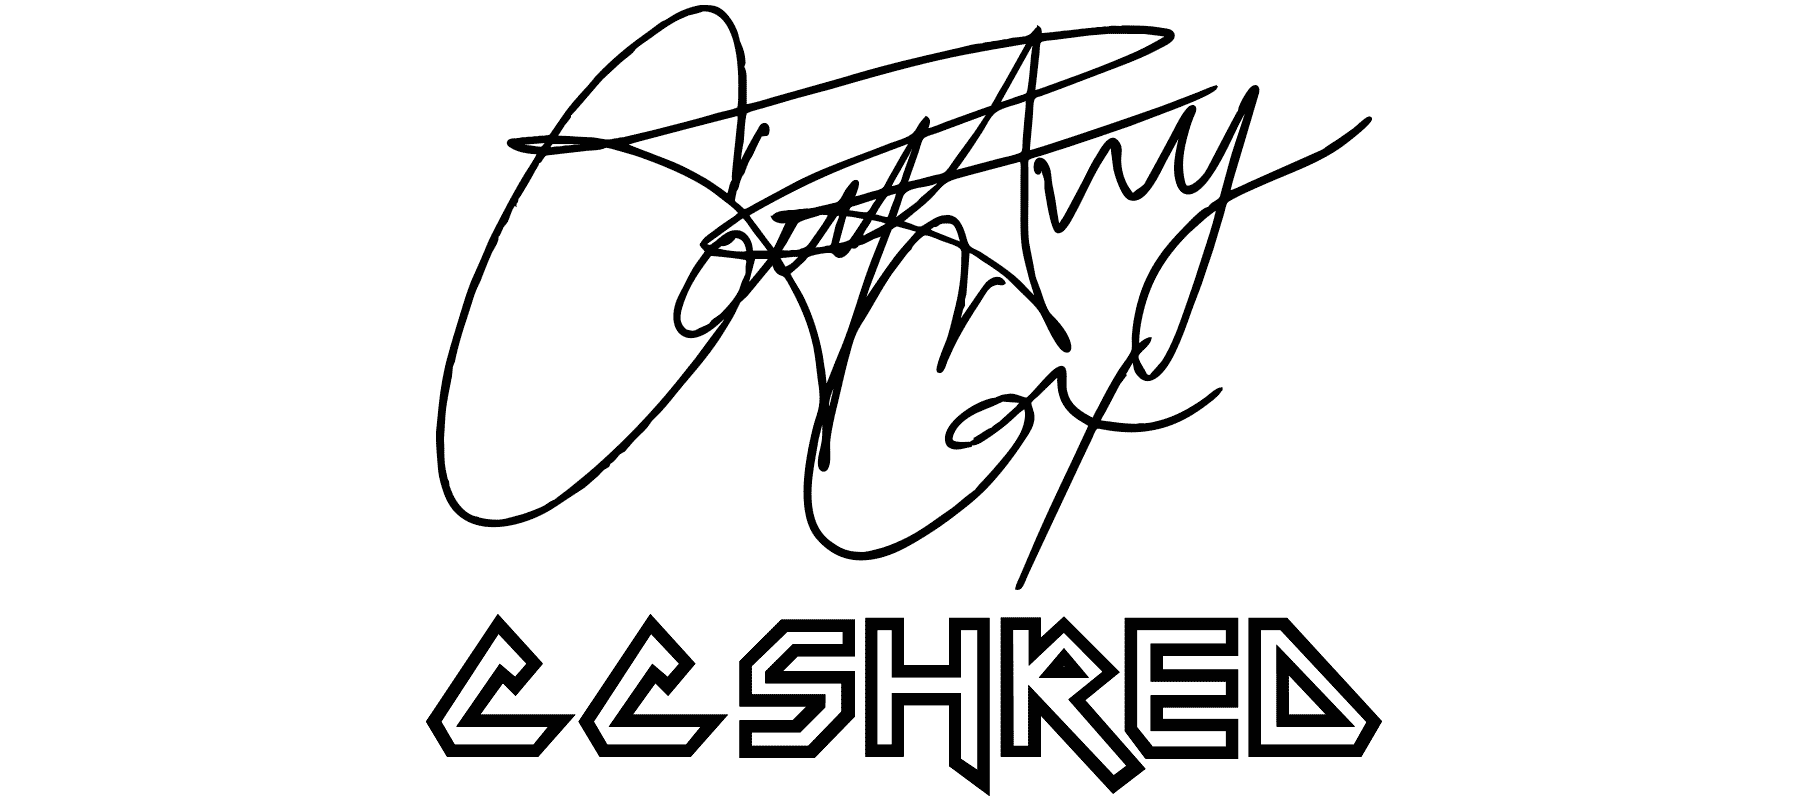 Courtney Cox - CC Shred Logo